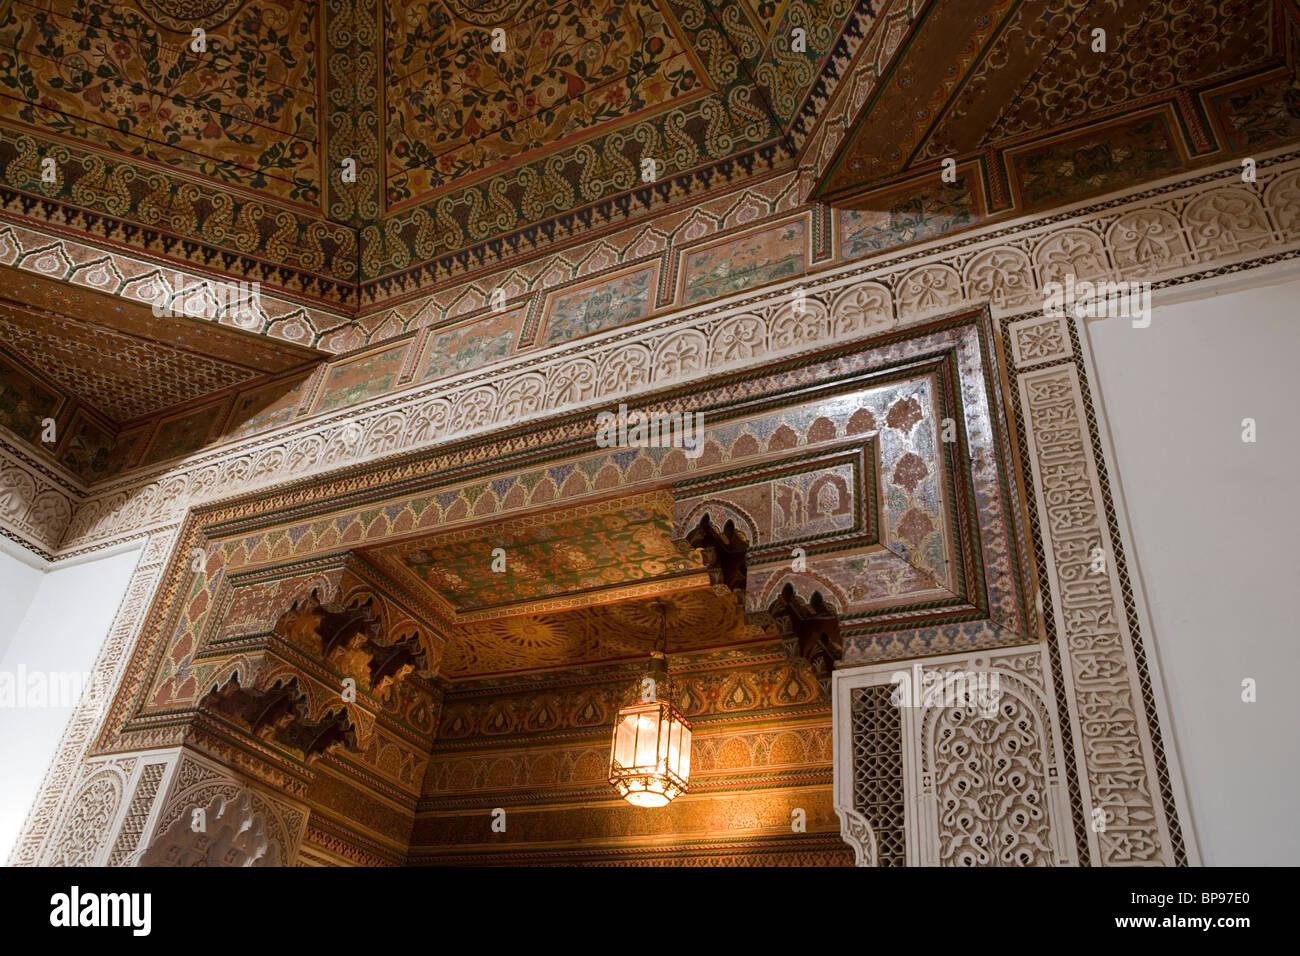 Mosaik Fliesen, Wand und Decke im Palais De La Bahia-Palast, Marrakesch, Marokko, Afrika Stockfoto